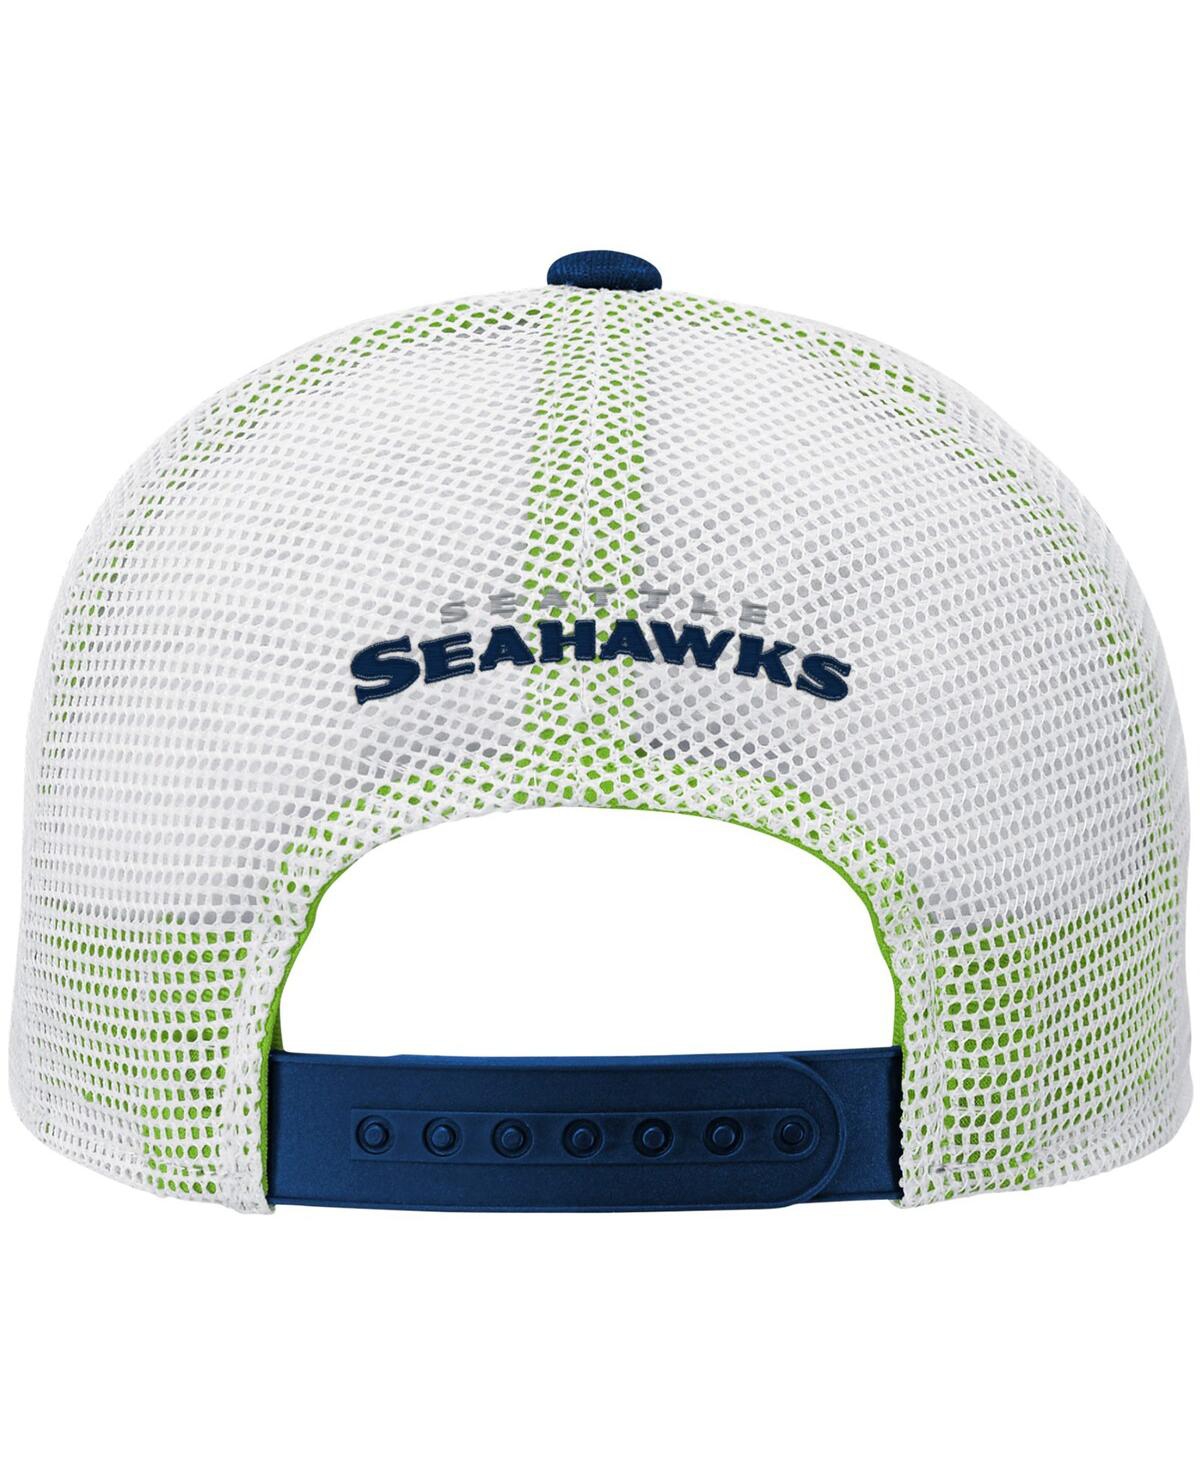 Shop Outerstuff Big Boys College Navy Seattle Seahawks Core Lockup Snapback Hat